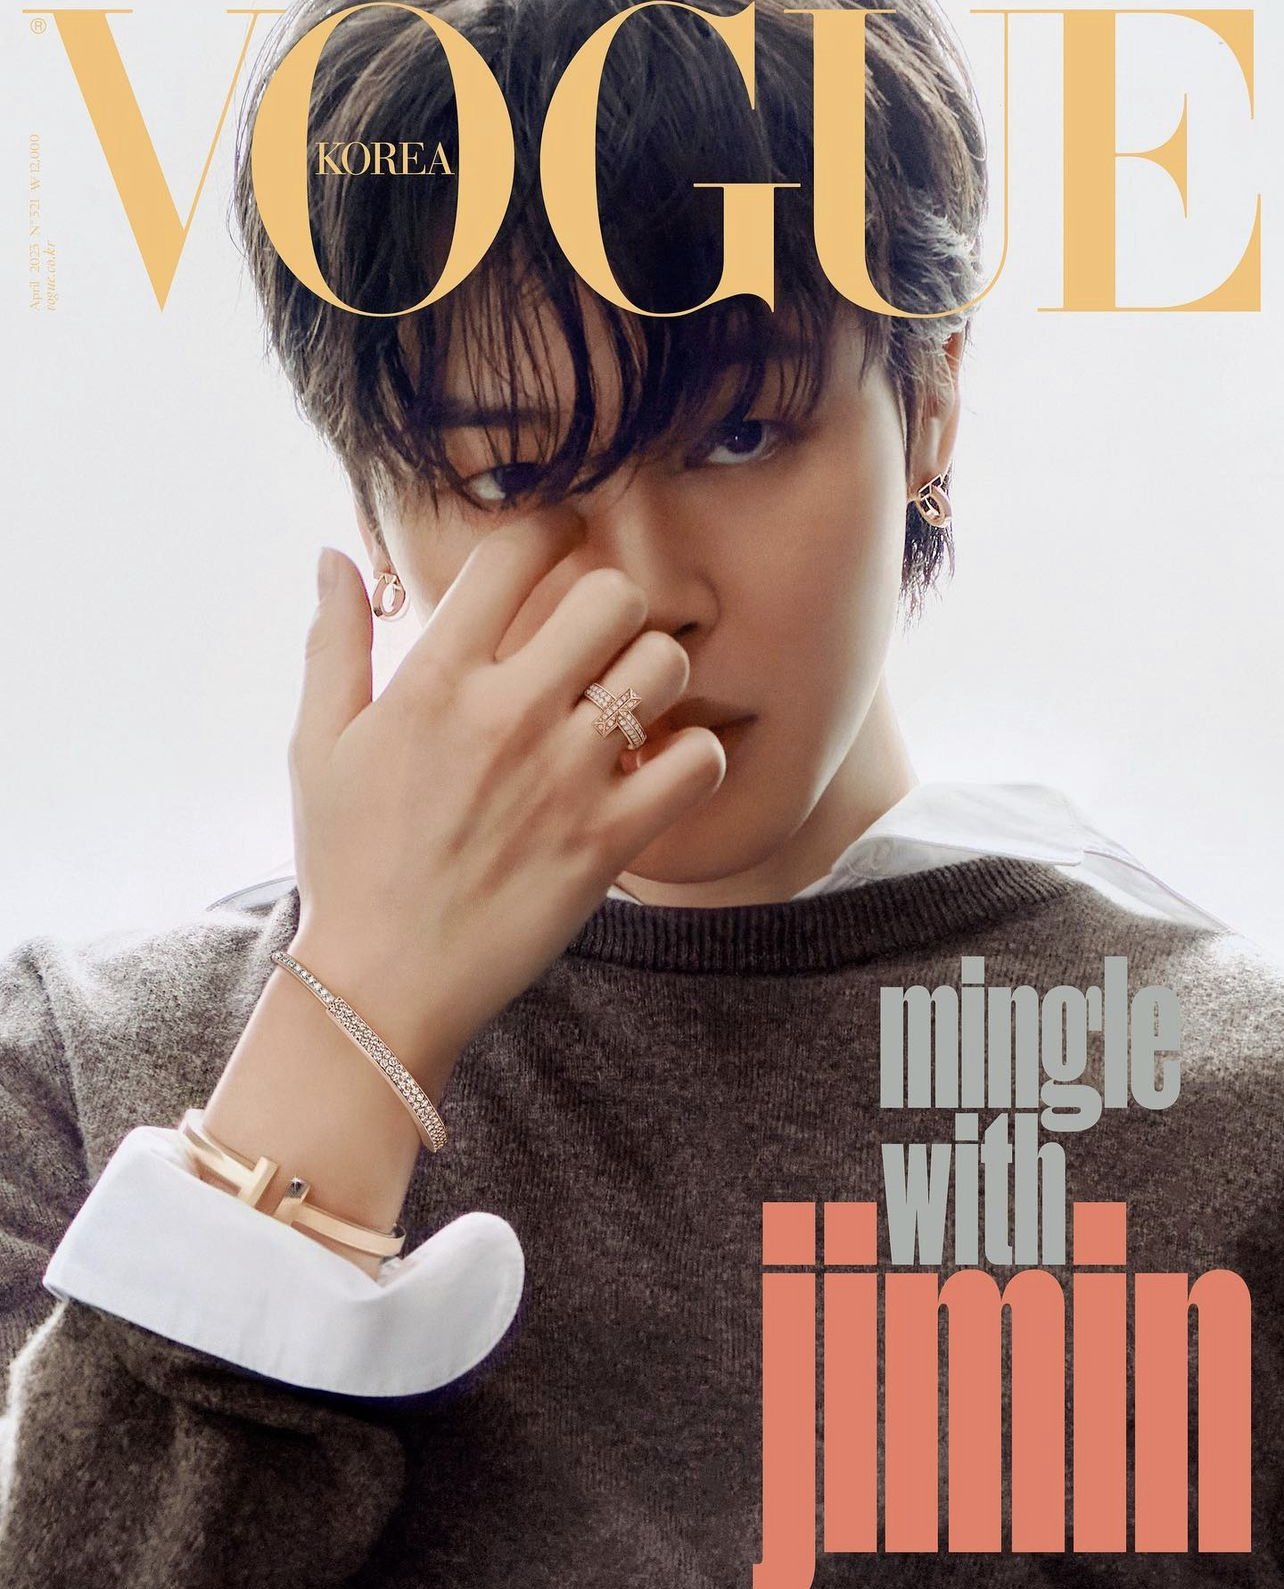 FB_Jimin_Vogue Korea(1).jpg